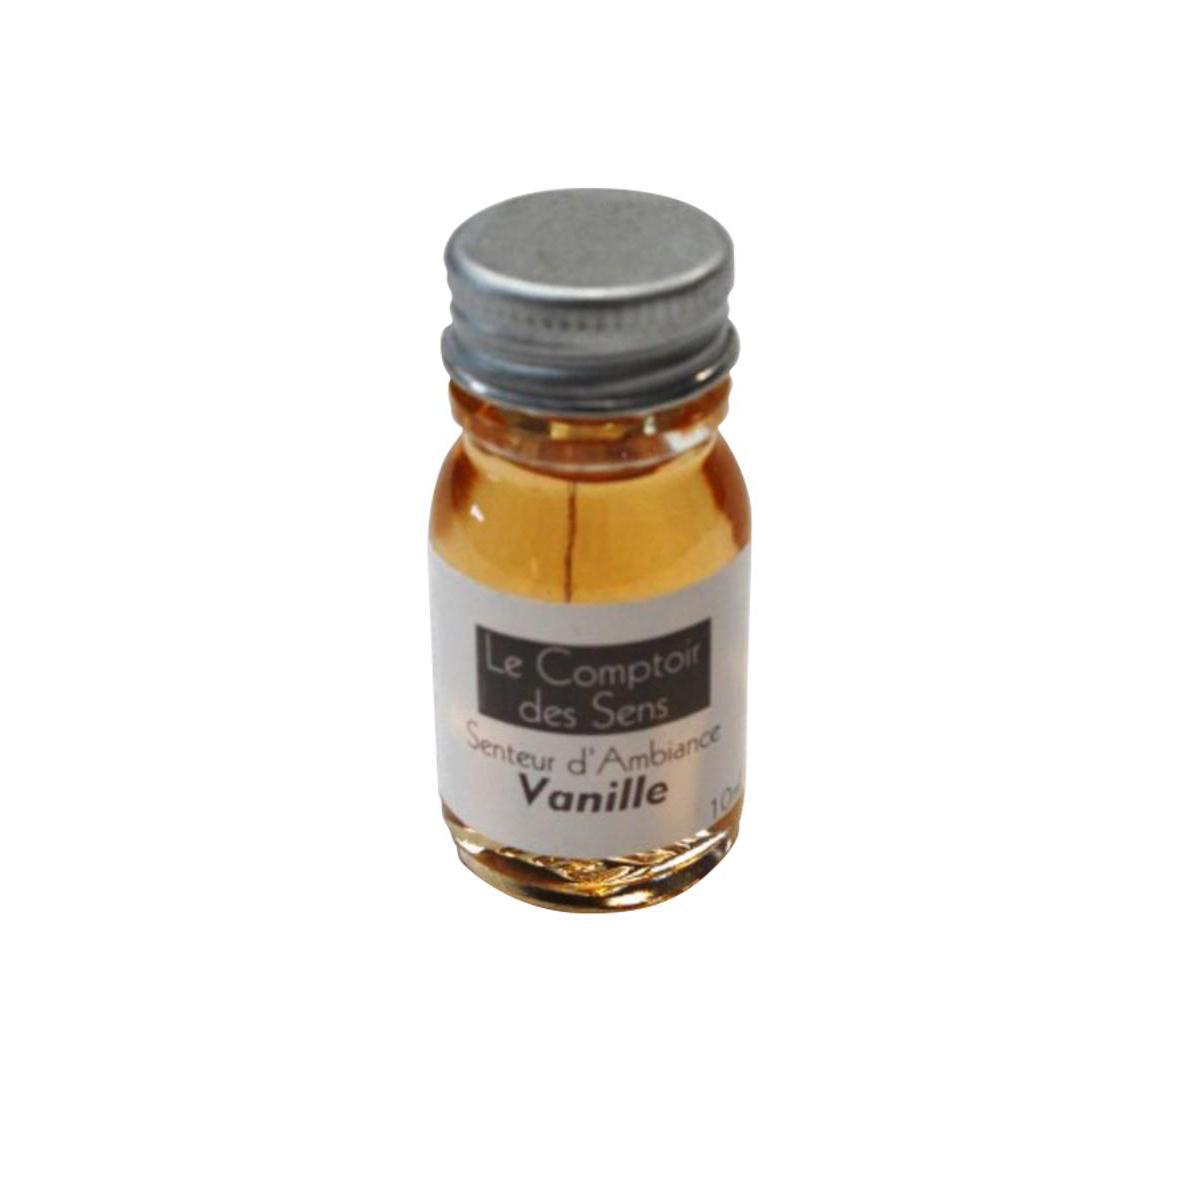 Extrait senteur vanille - Verre - 10 ml - Orange